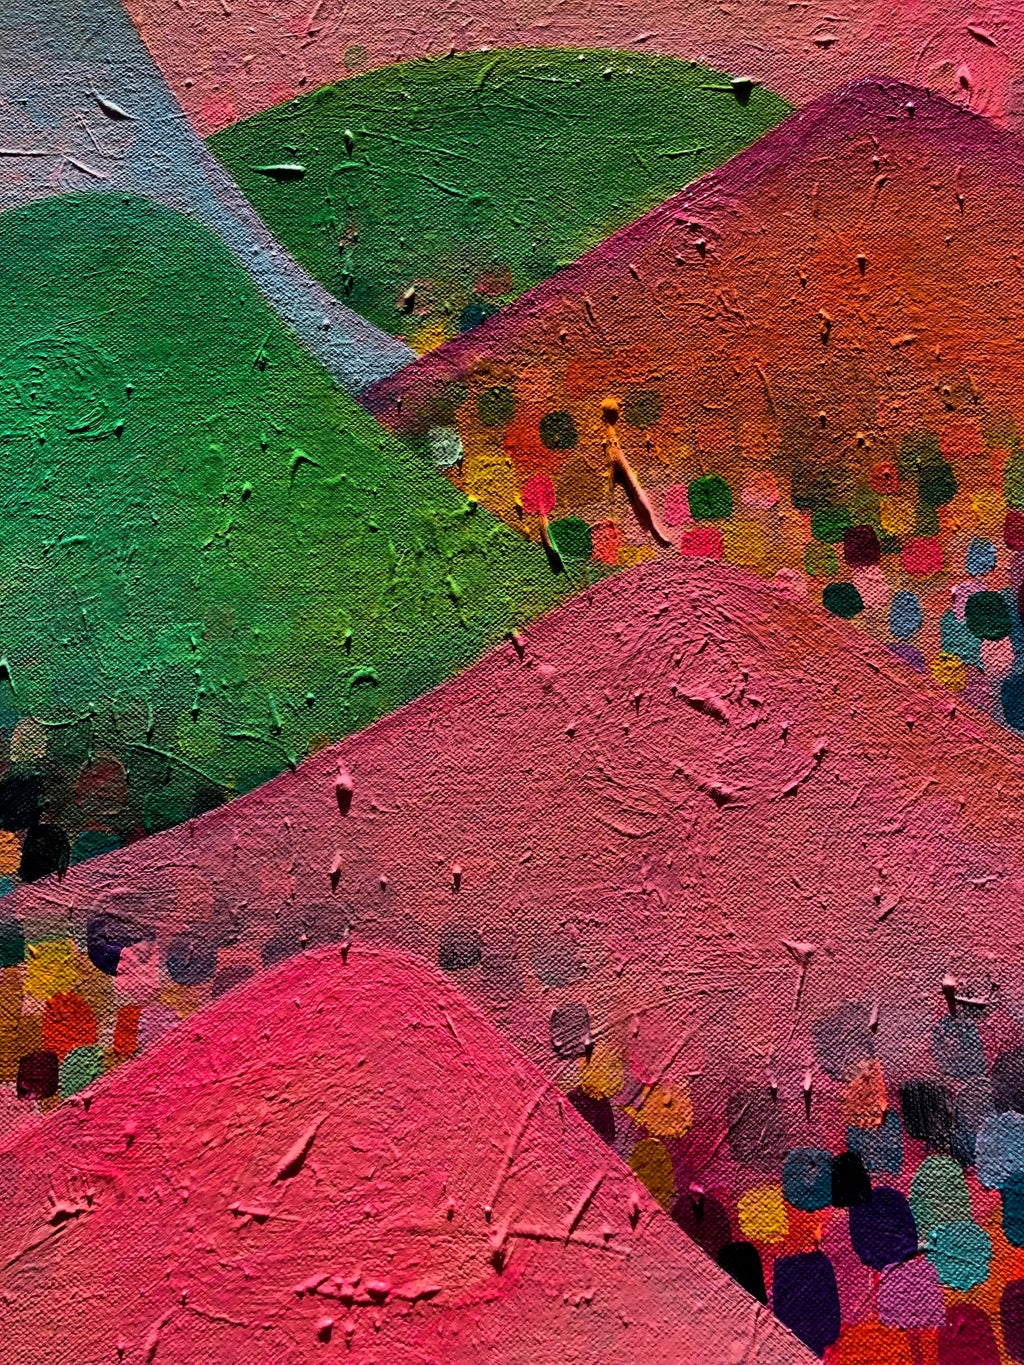 Kaleidoscope Mountains Pink Painting